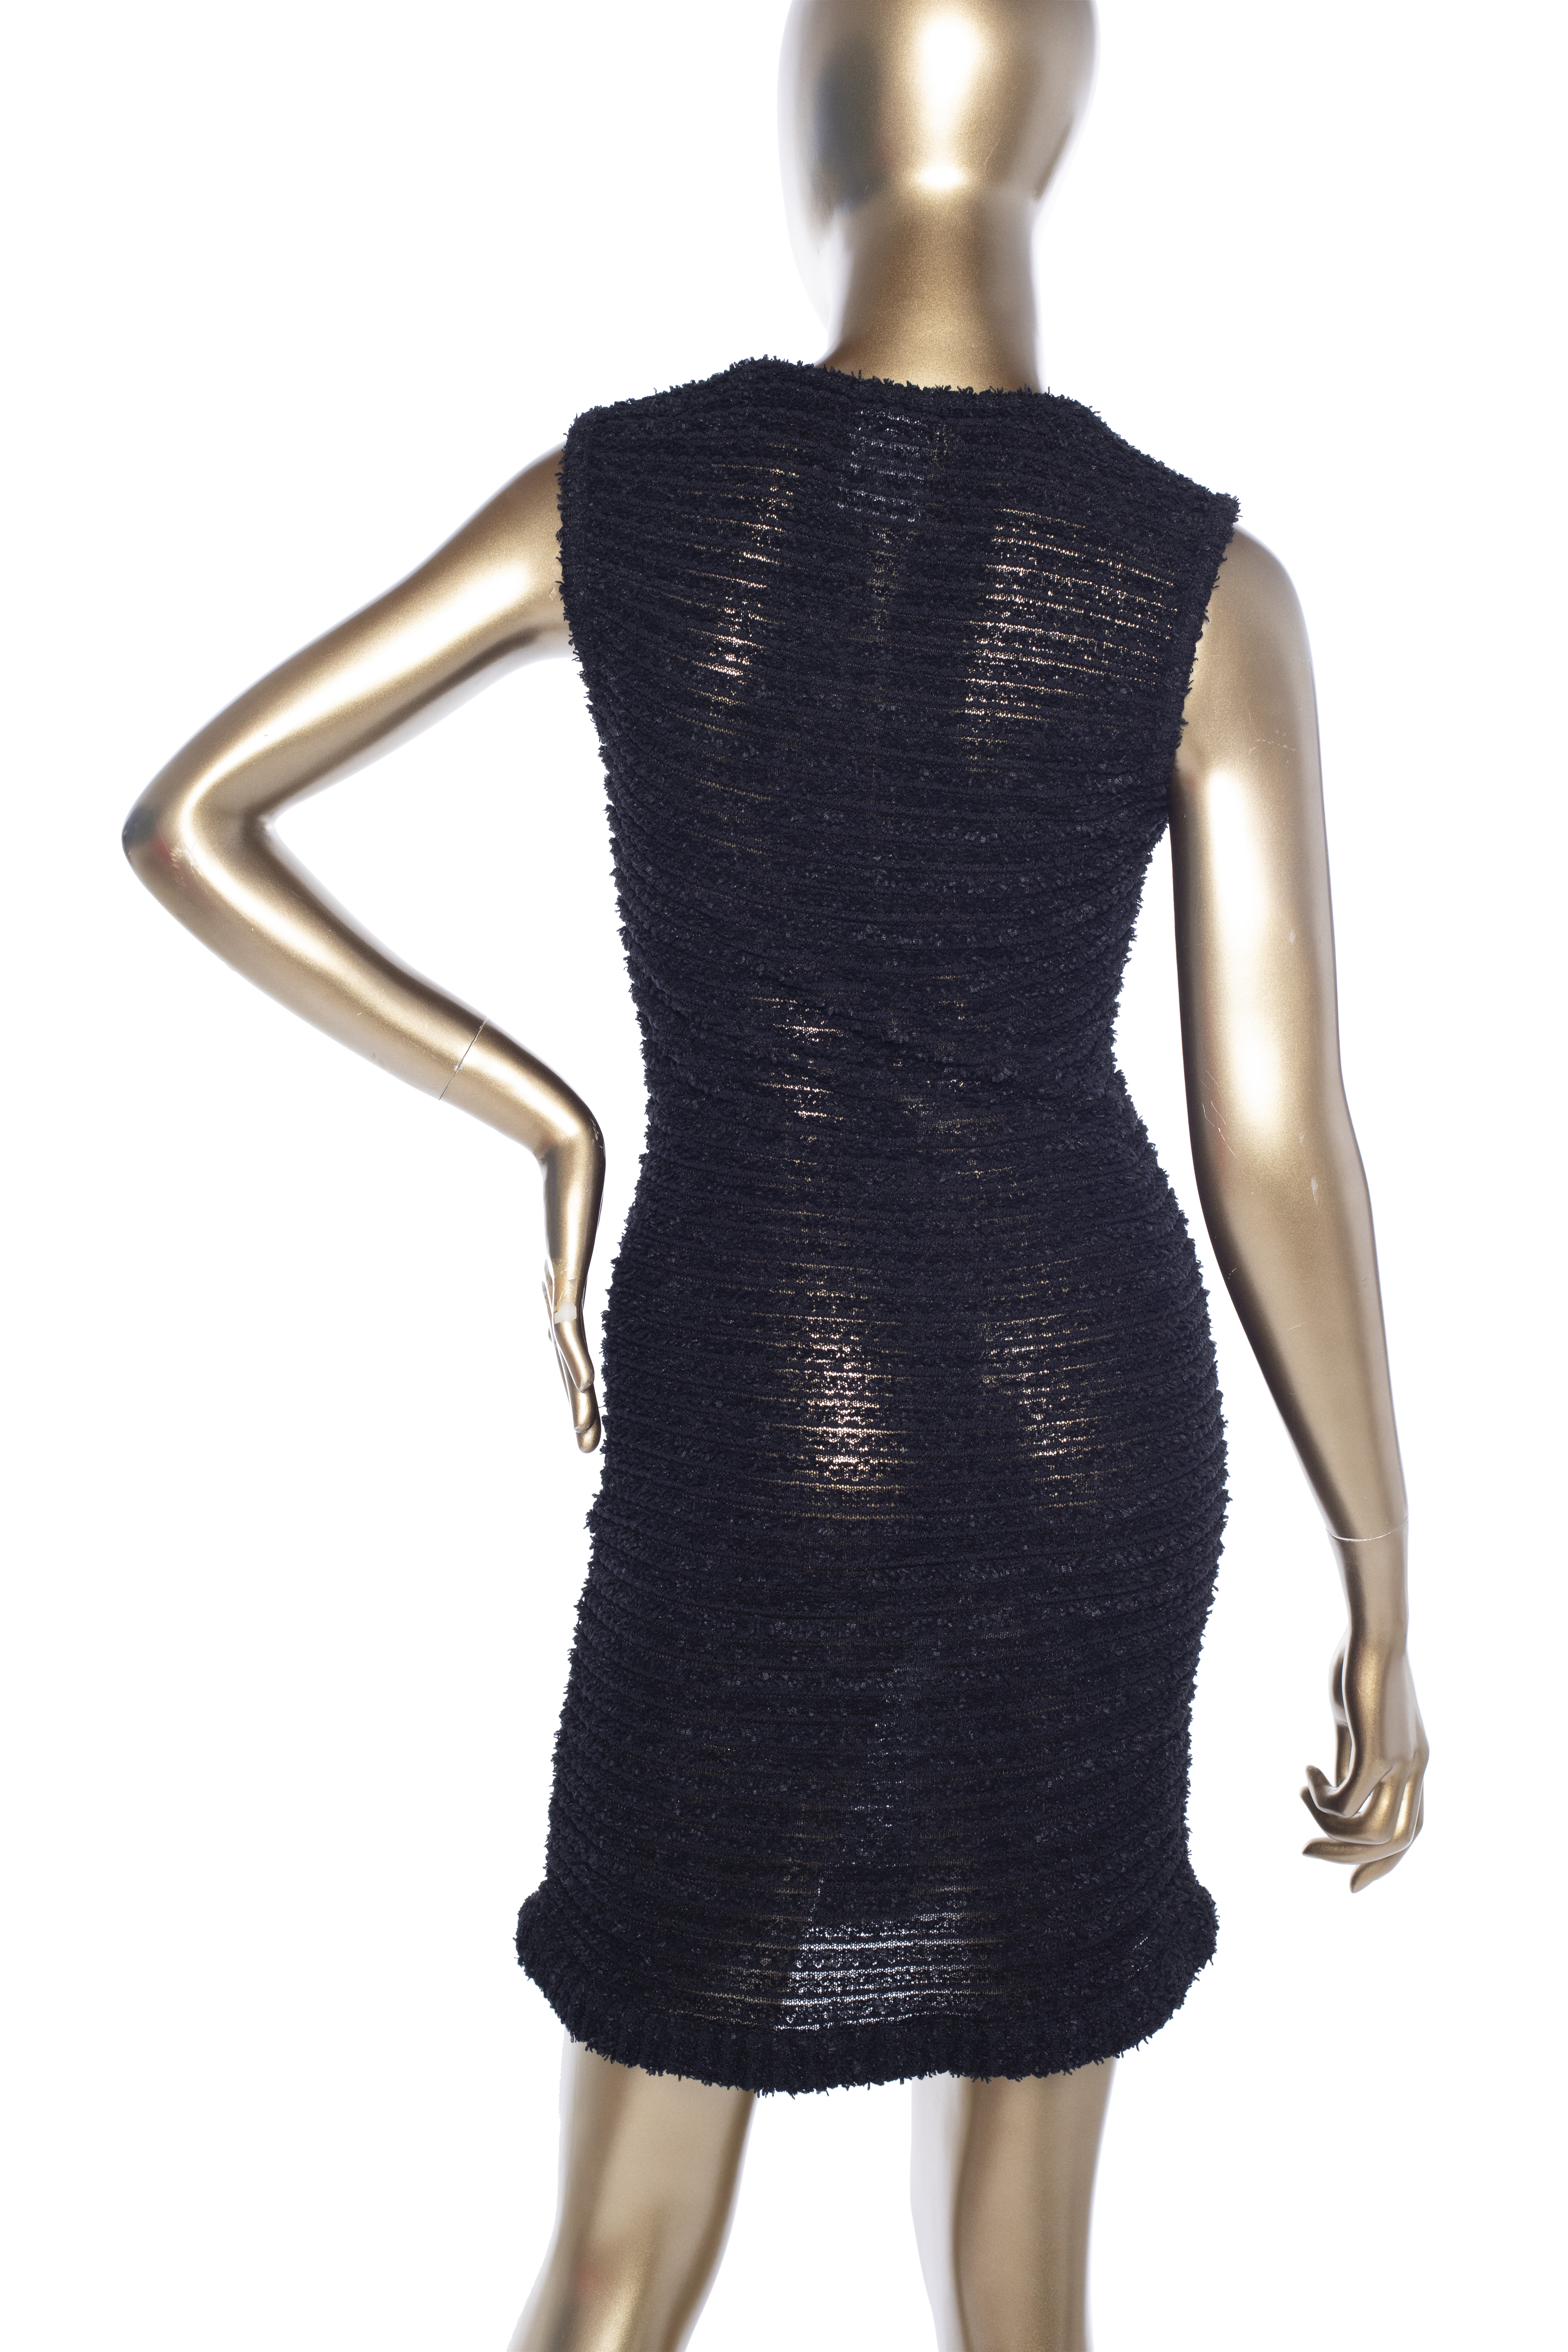 Chanel Knit Dress